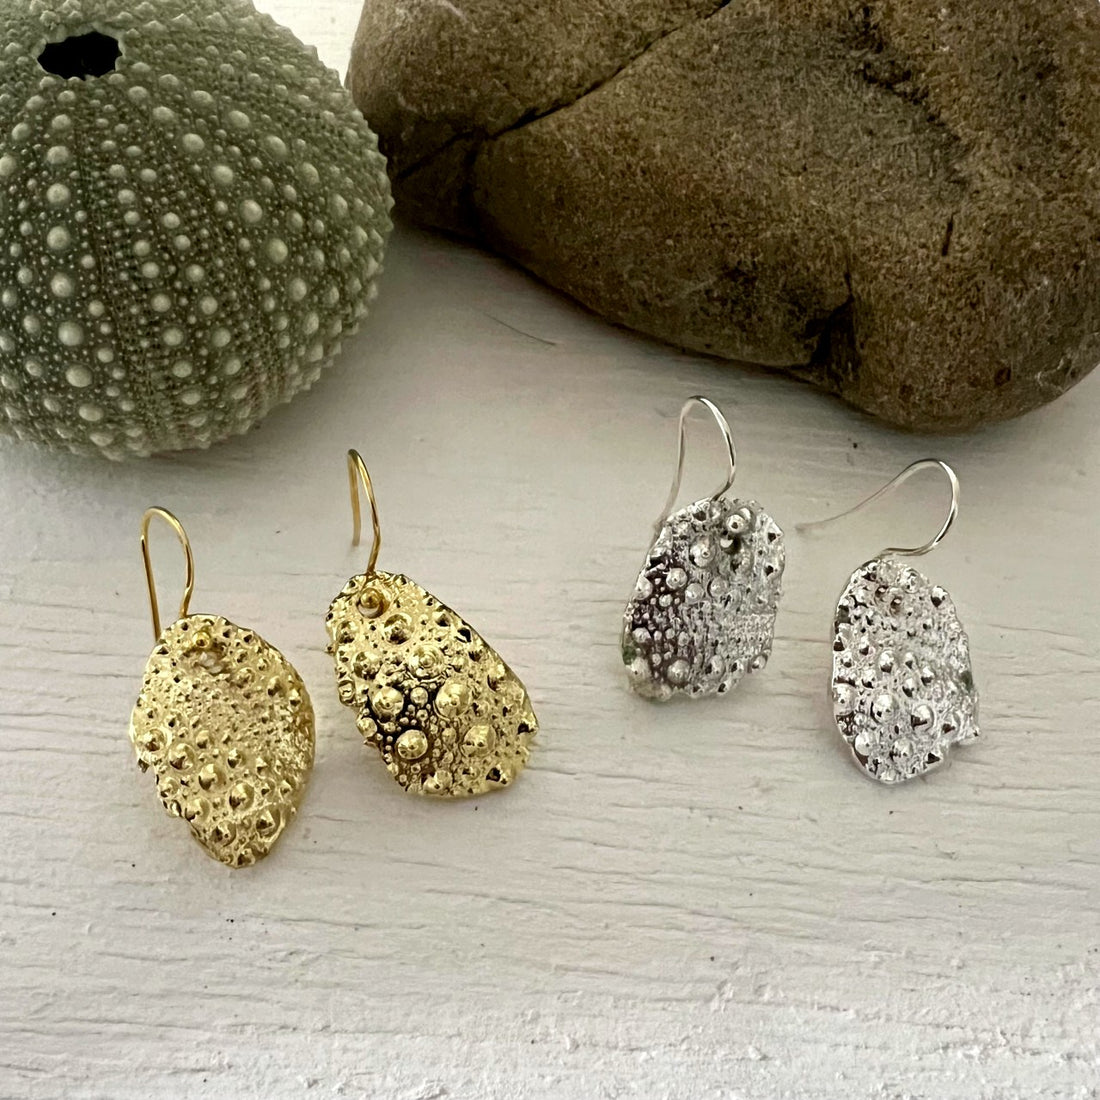 Broken Beachcombed Kina Sea Urchin Shells Made into Jewellery